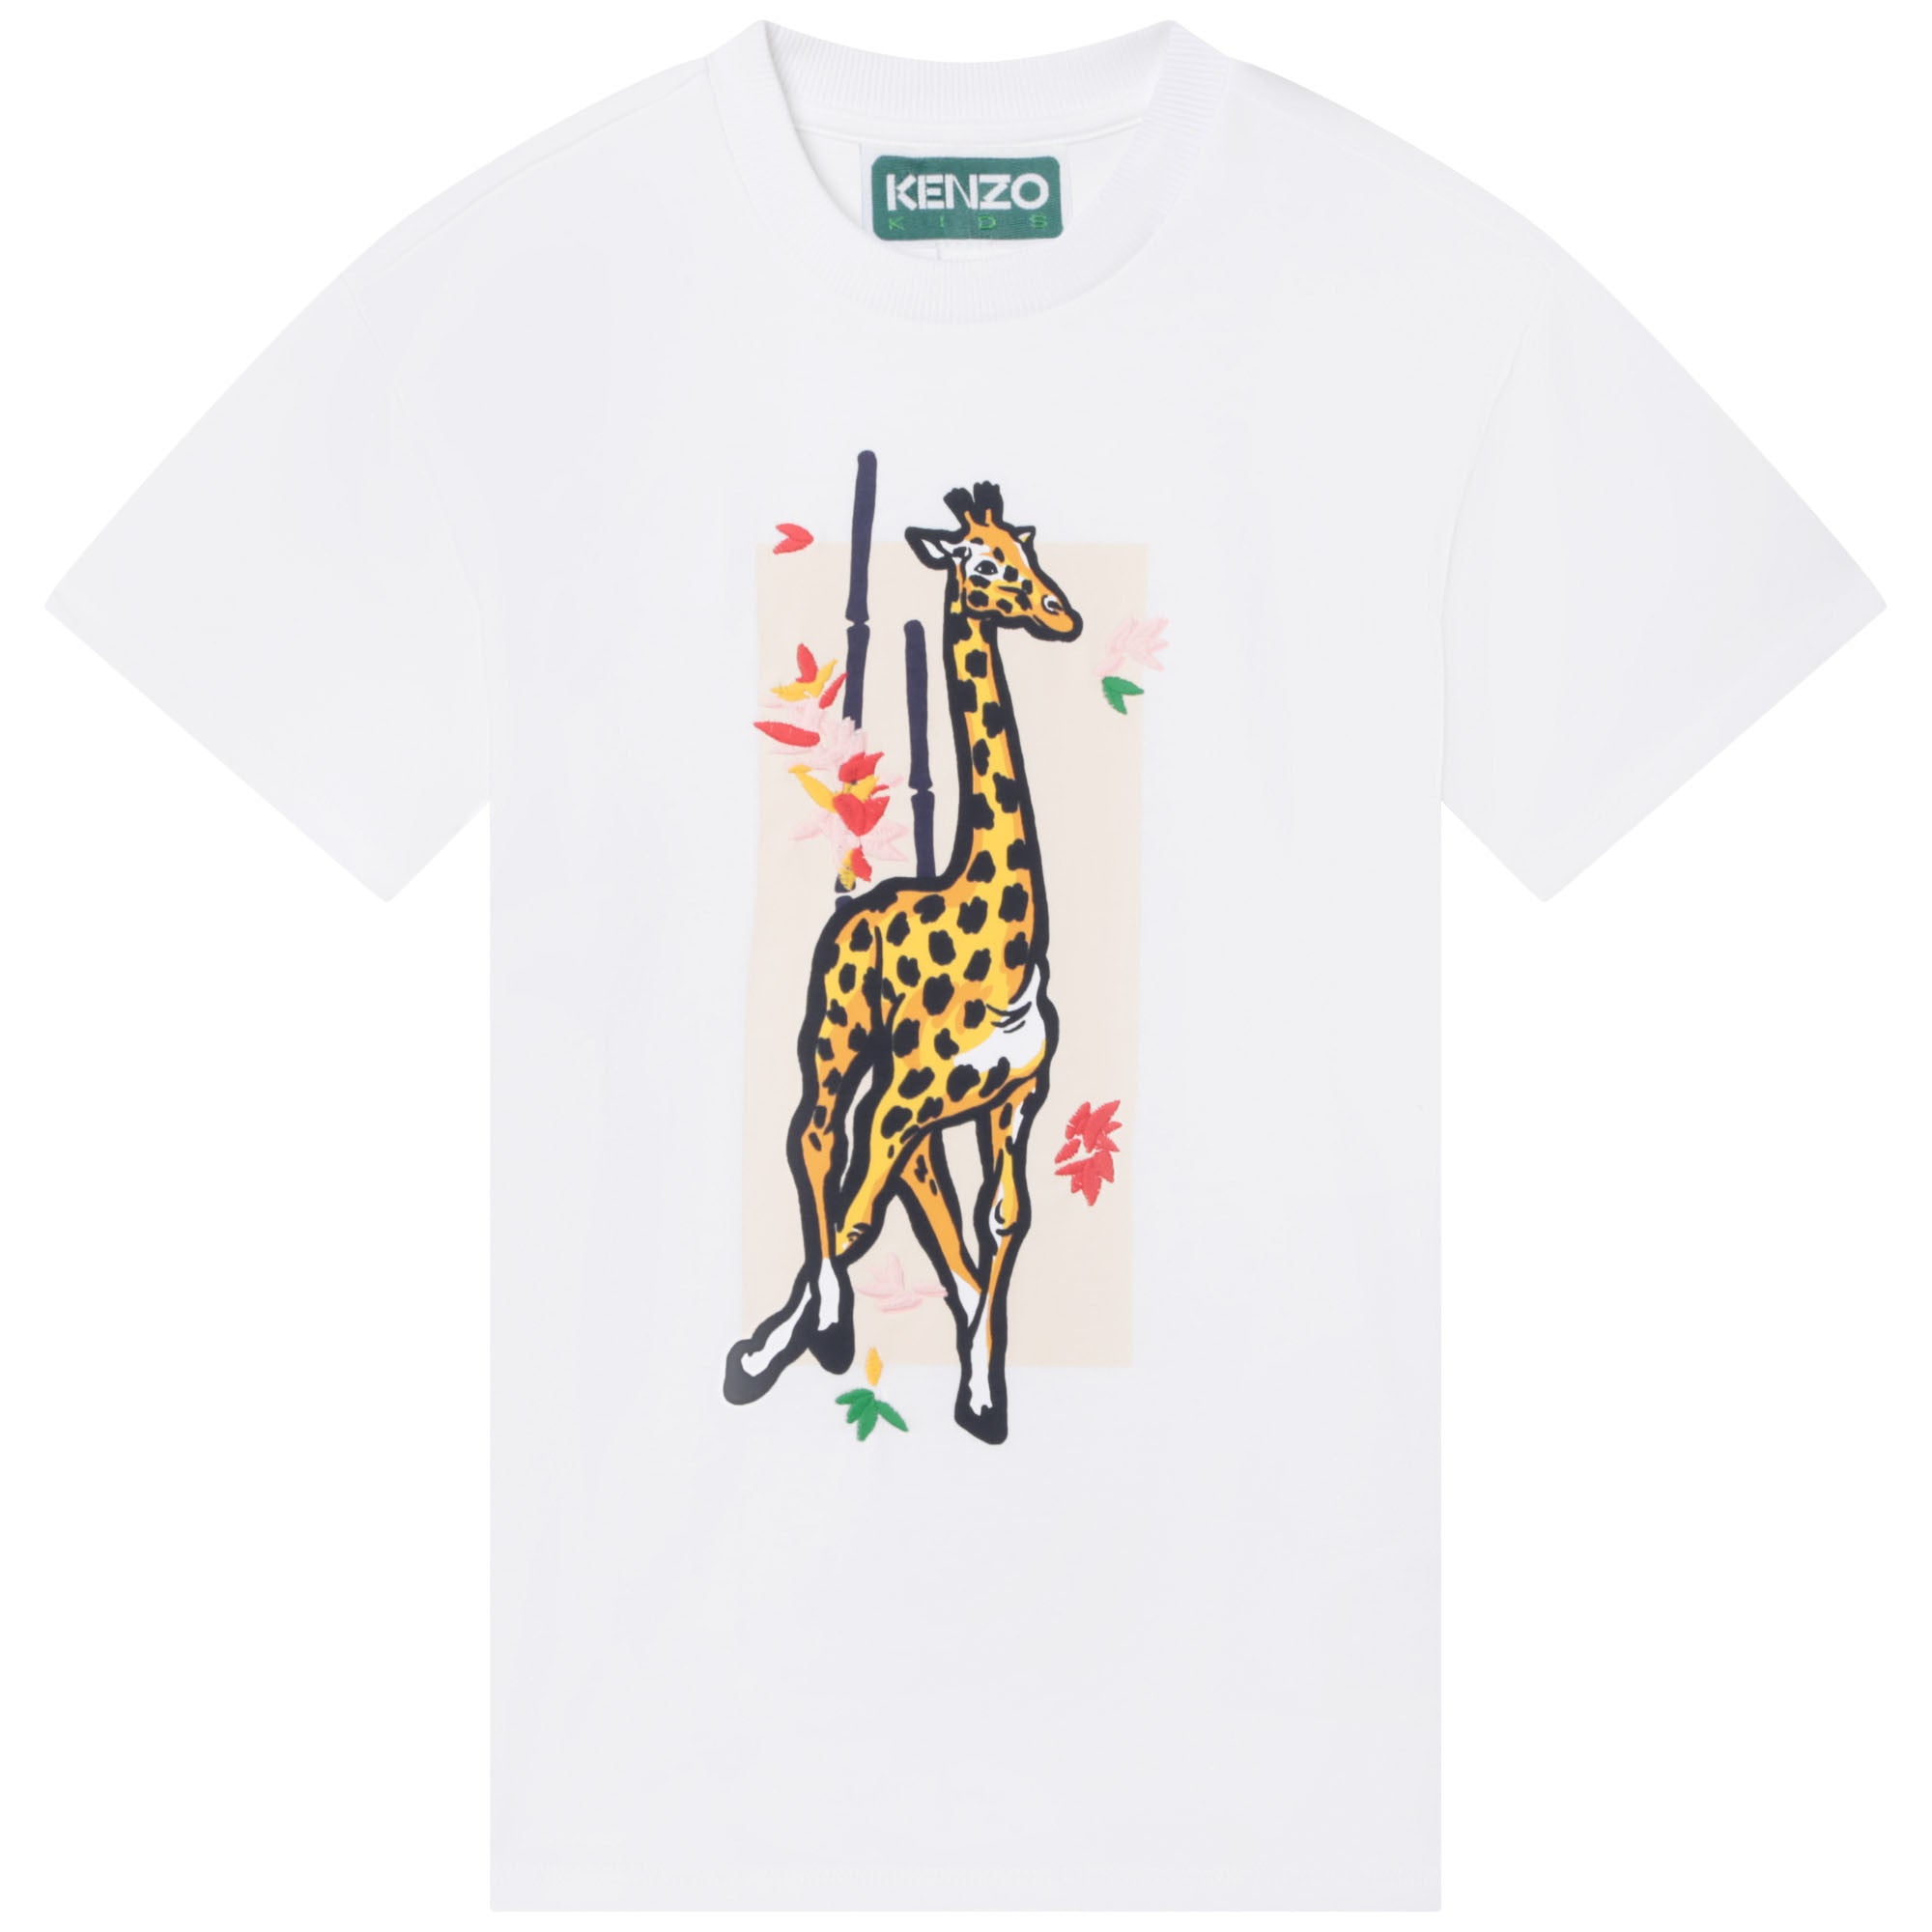 Kenzo White T-Shirt Dress for Girls with giraffe print